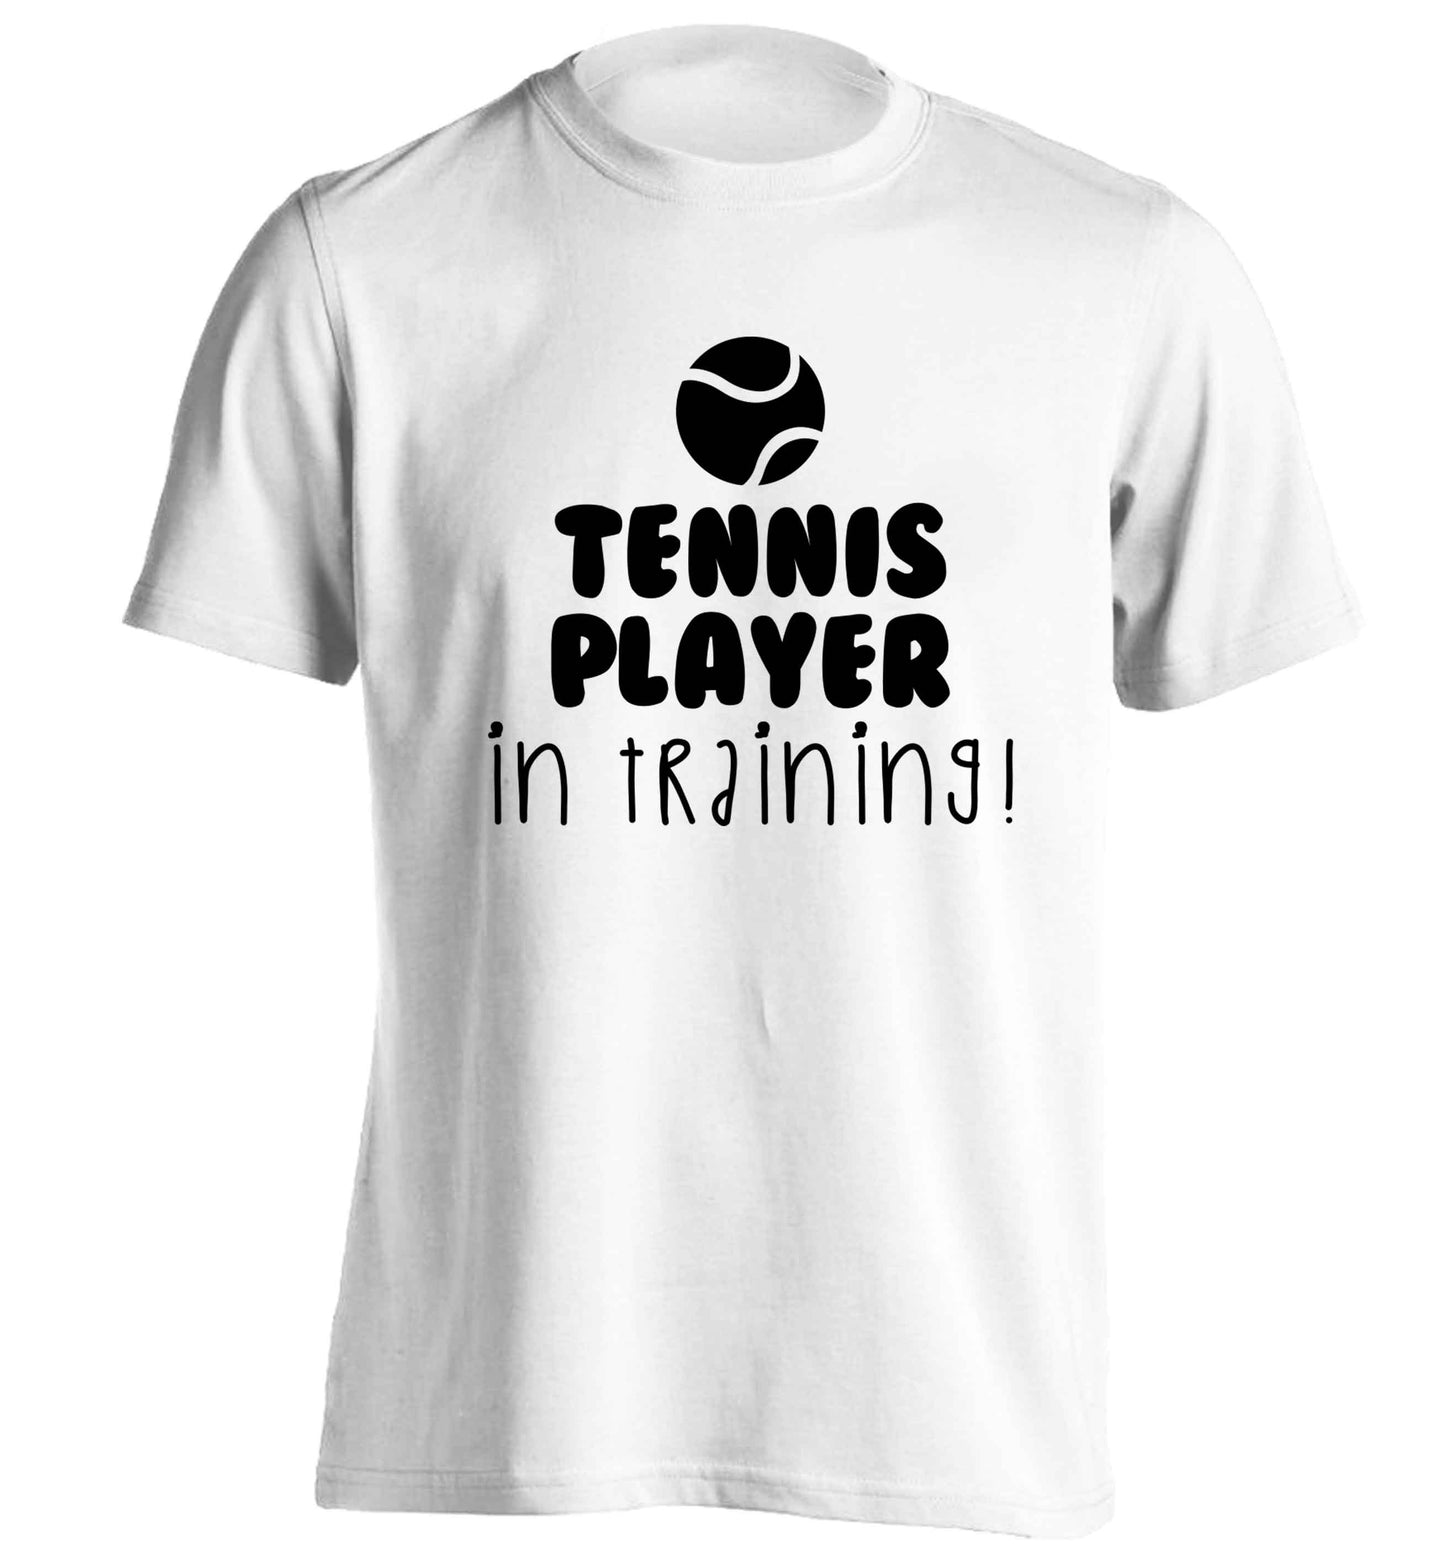 Tennis player in training adults unisex white Tshirt 2XL